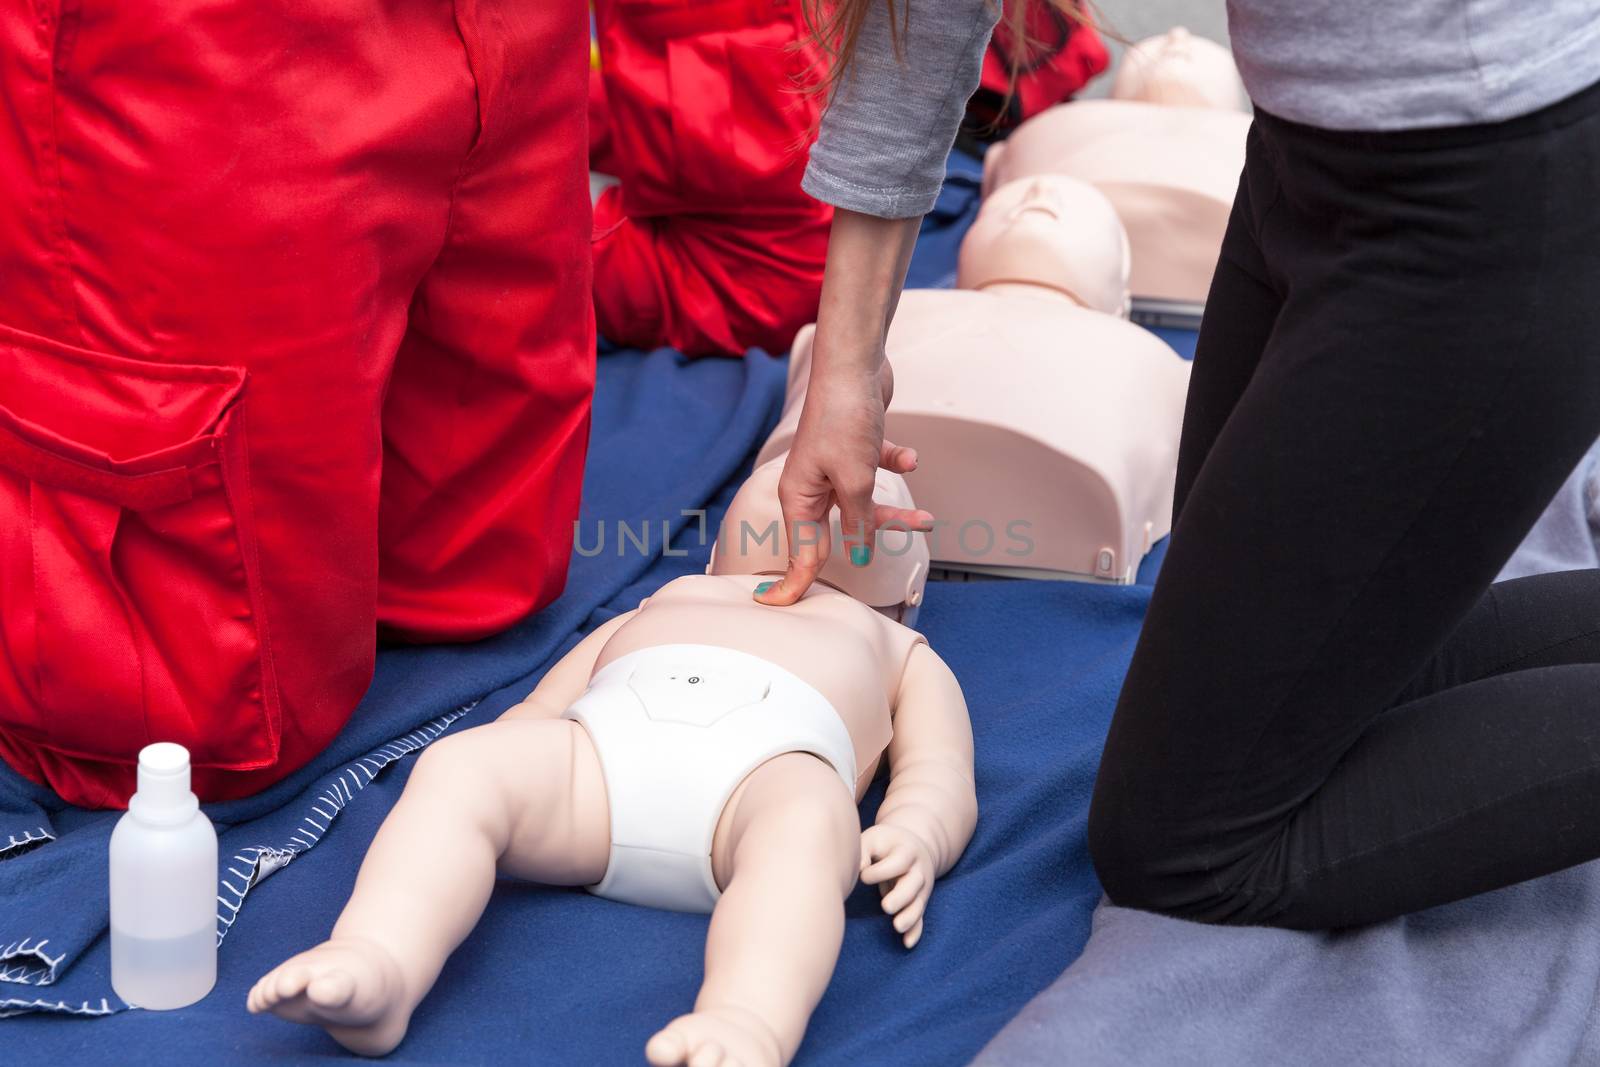 Infant CPR training manikin first aid. Cardiopulmonary resuscitation - CPR.